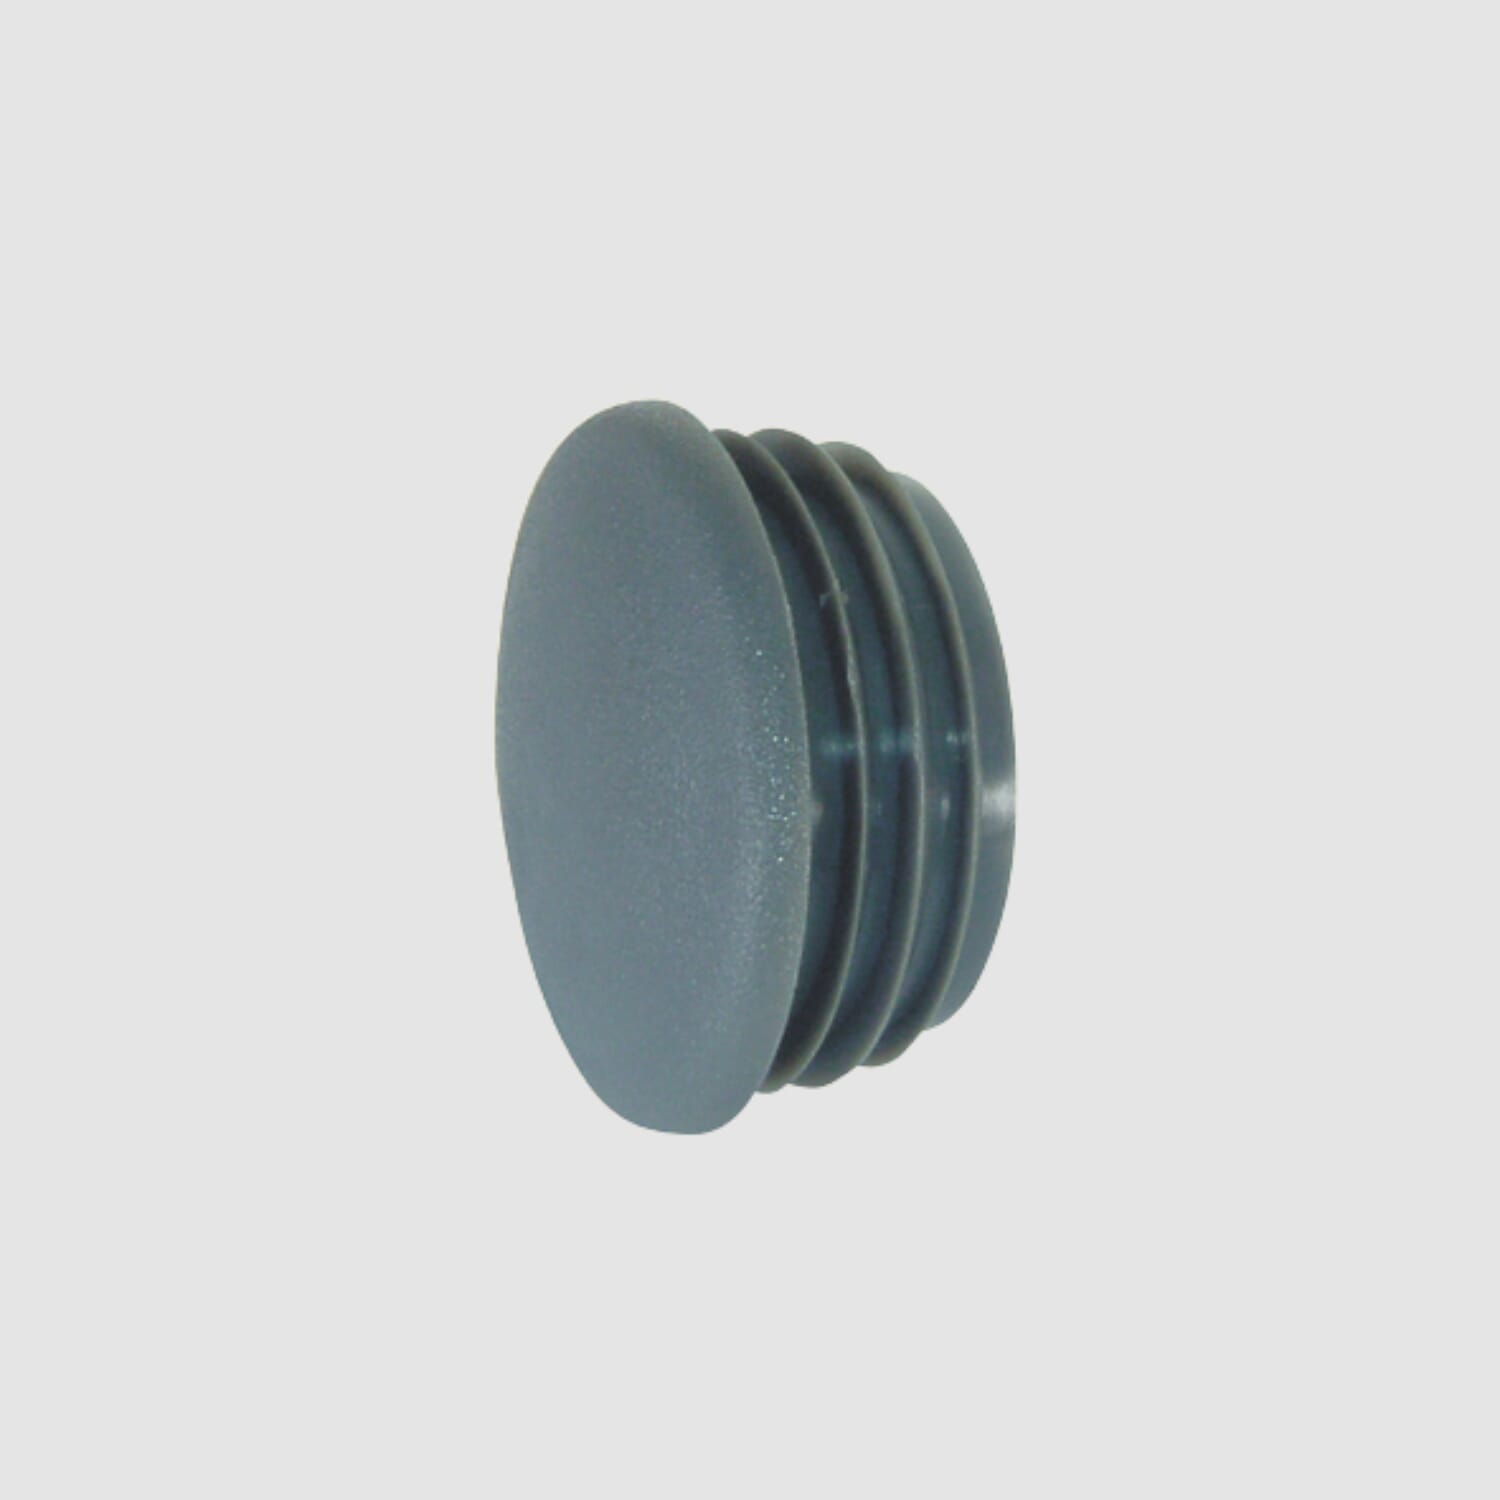 Plastic End Cap 60mm 133 60 E Scaffold Tube Clamps for Steel Key Clamp 133-E60 